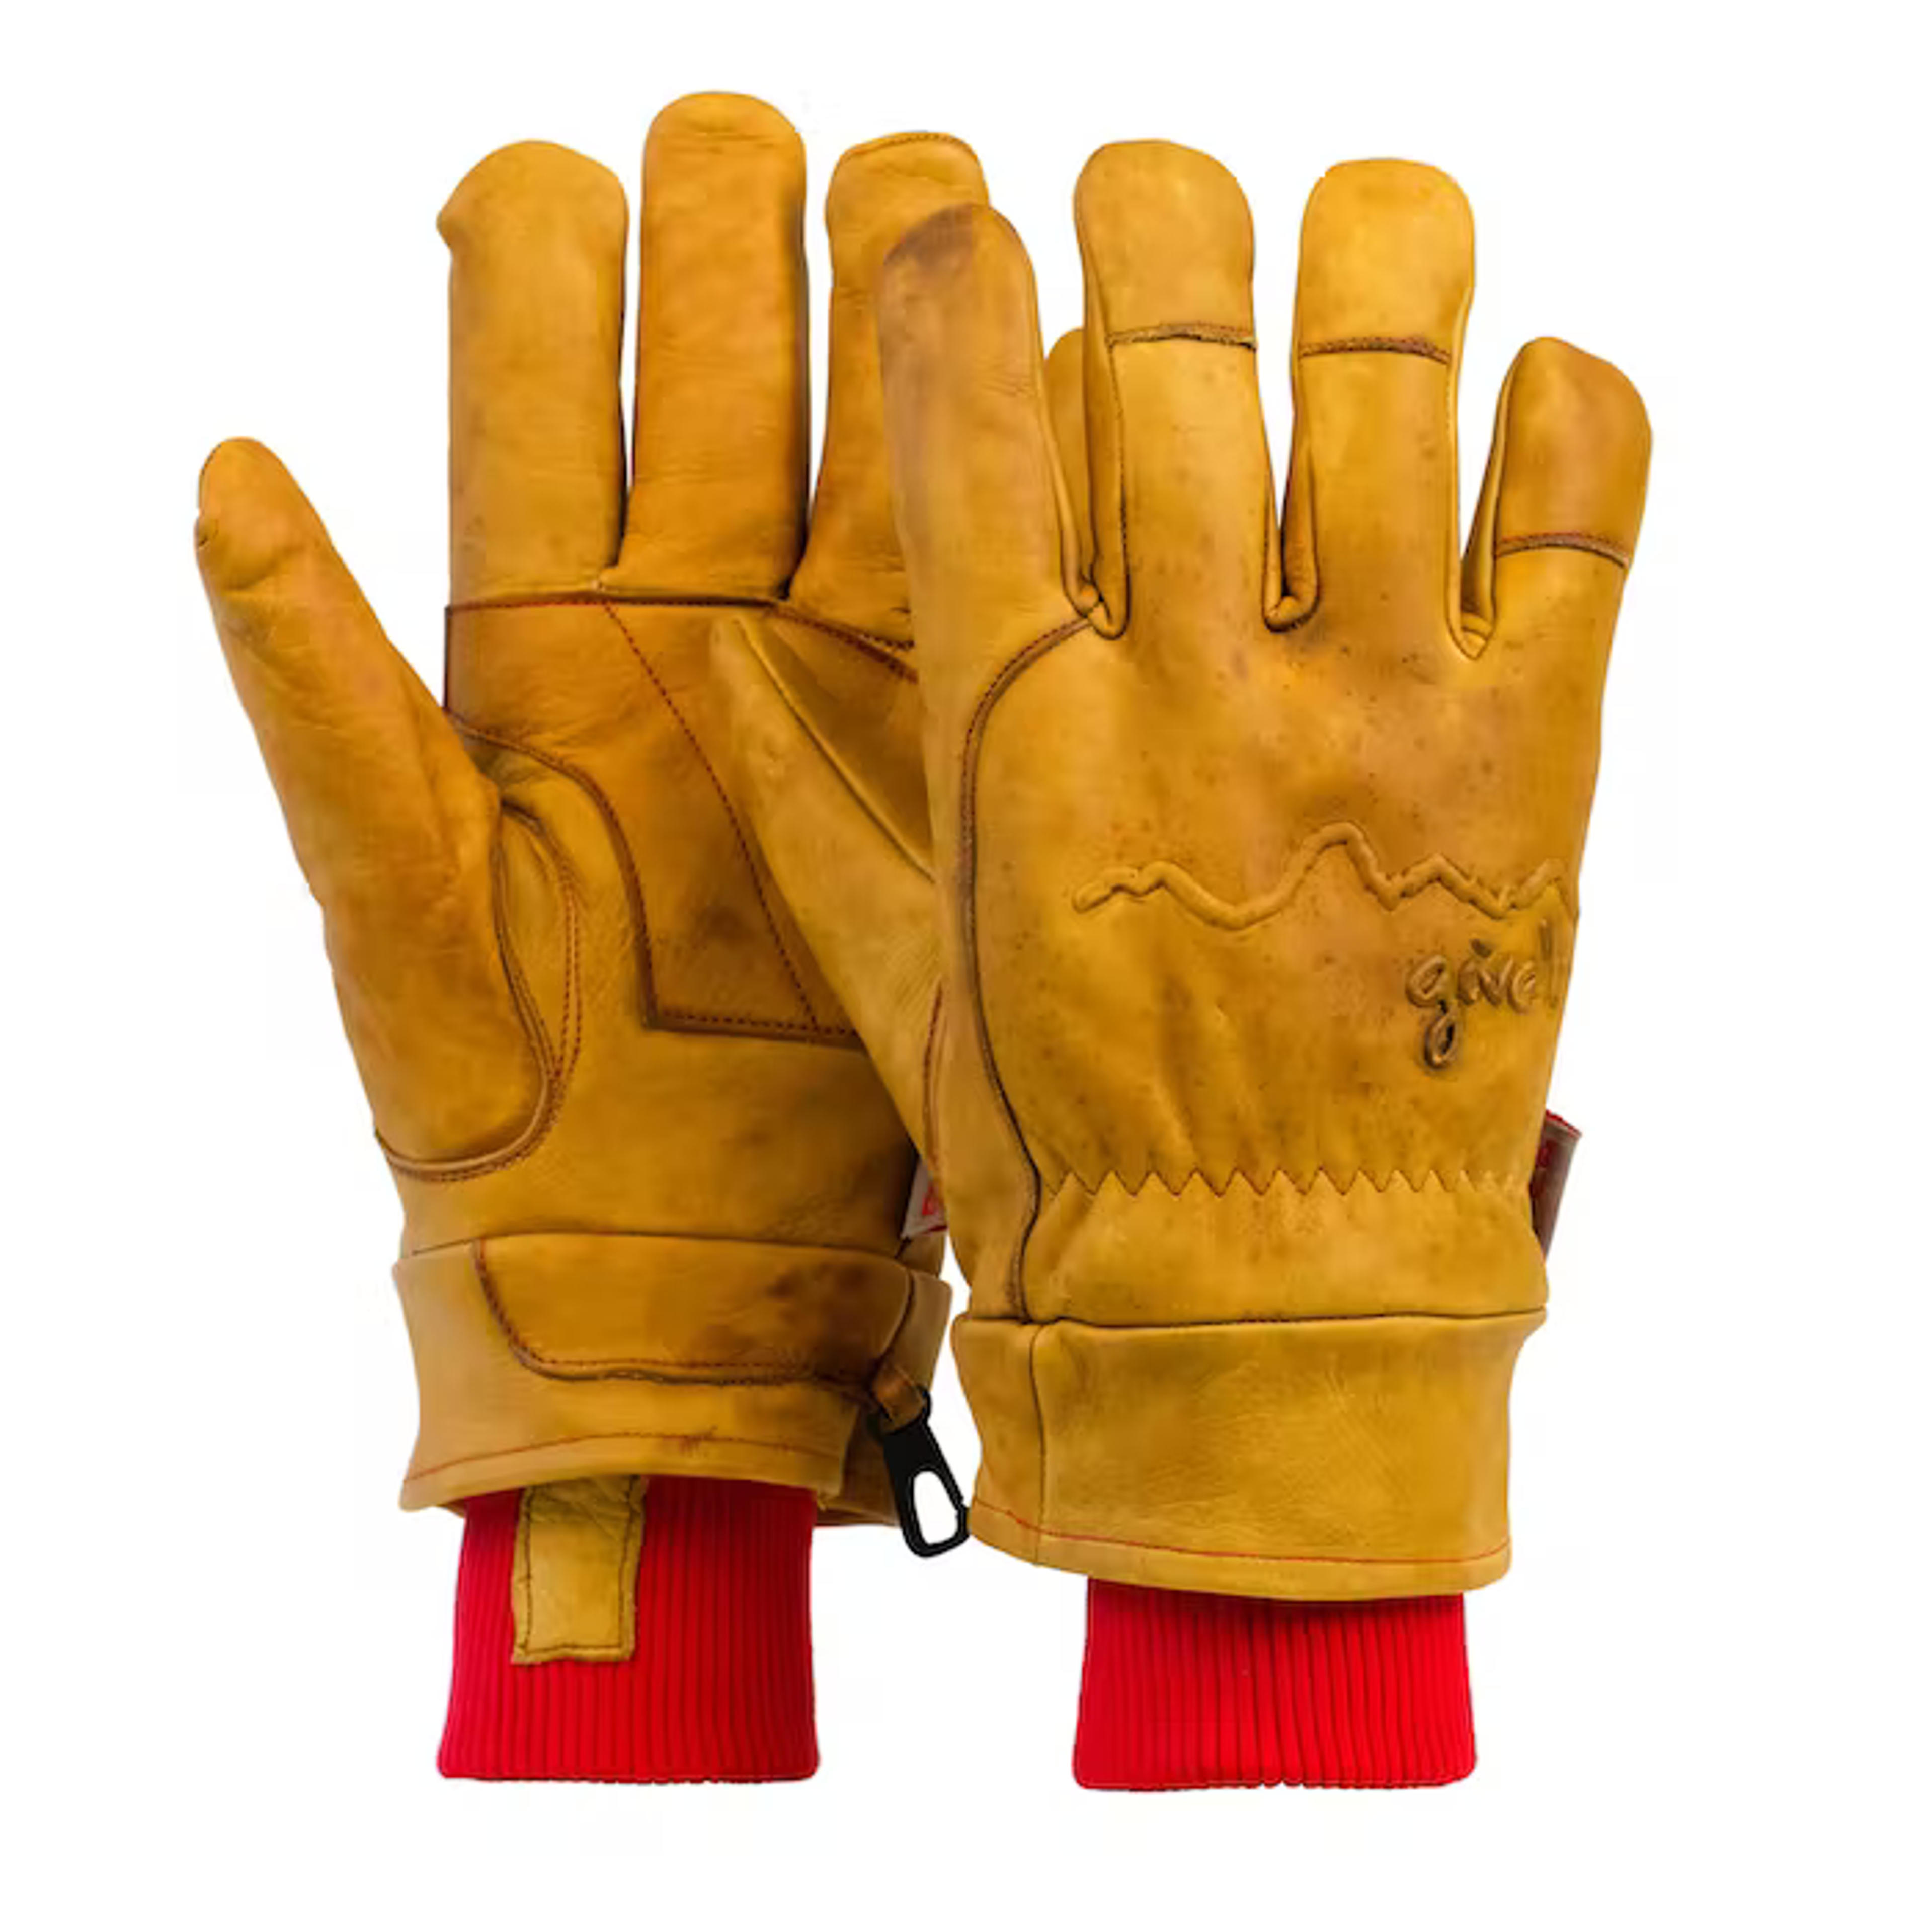 Give'r 4 Season Glove w/ Wax Coating - Yellow | Gloves | Huckberry